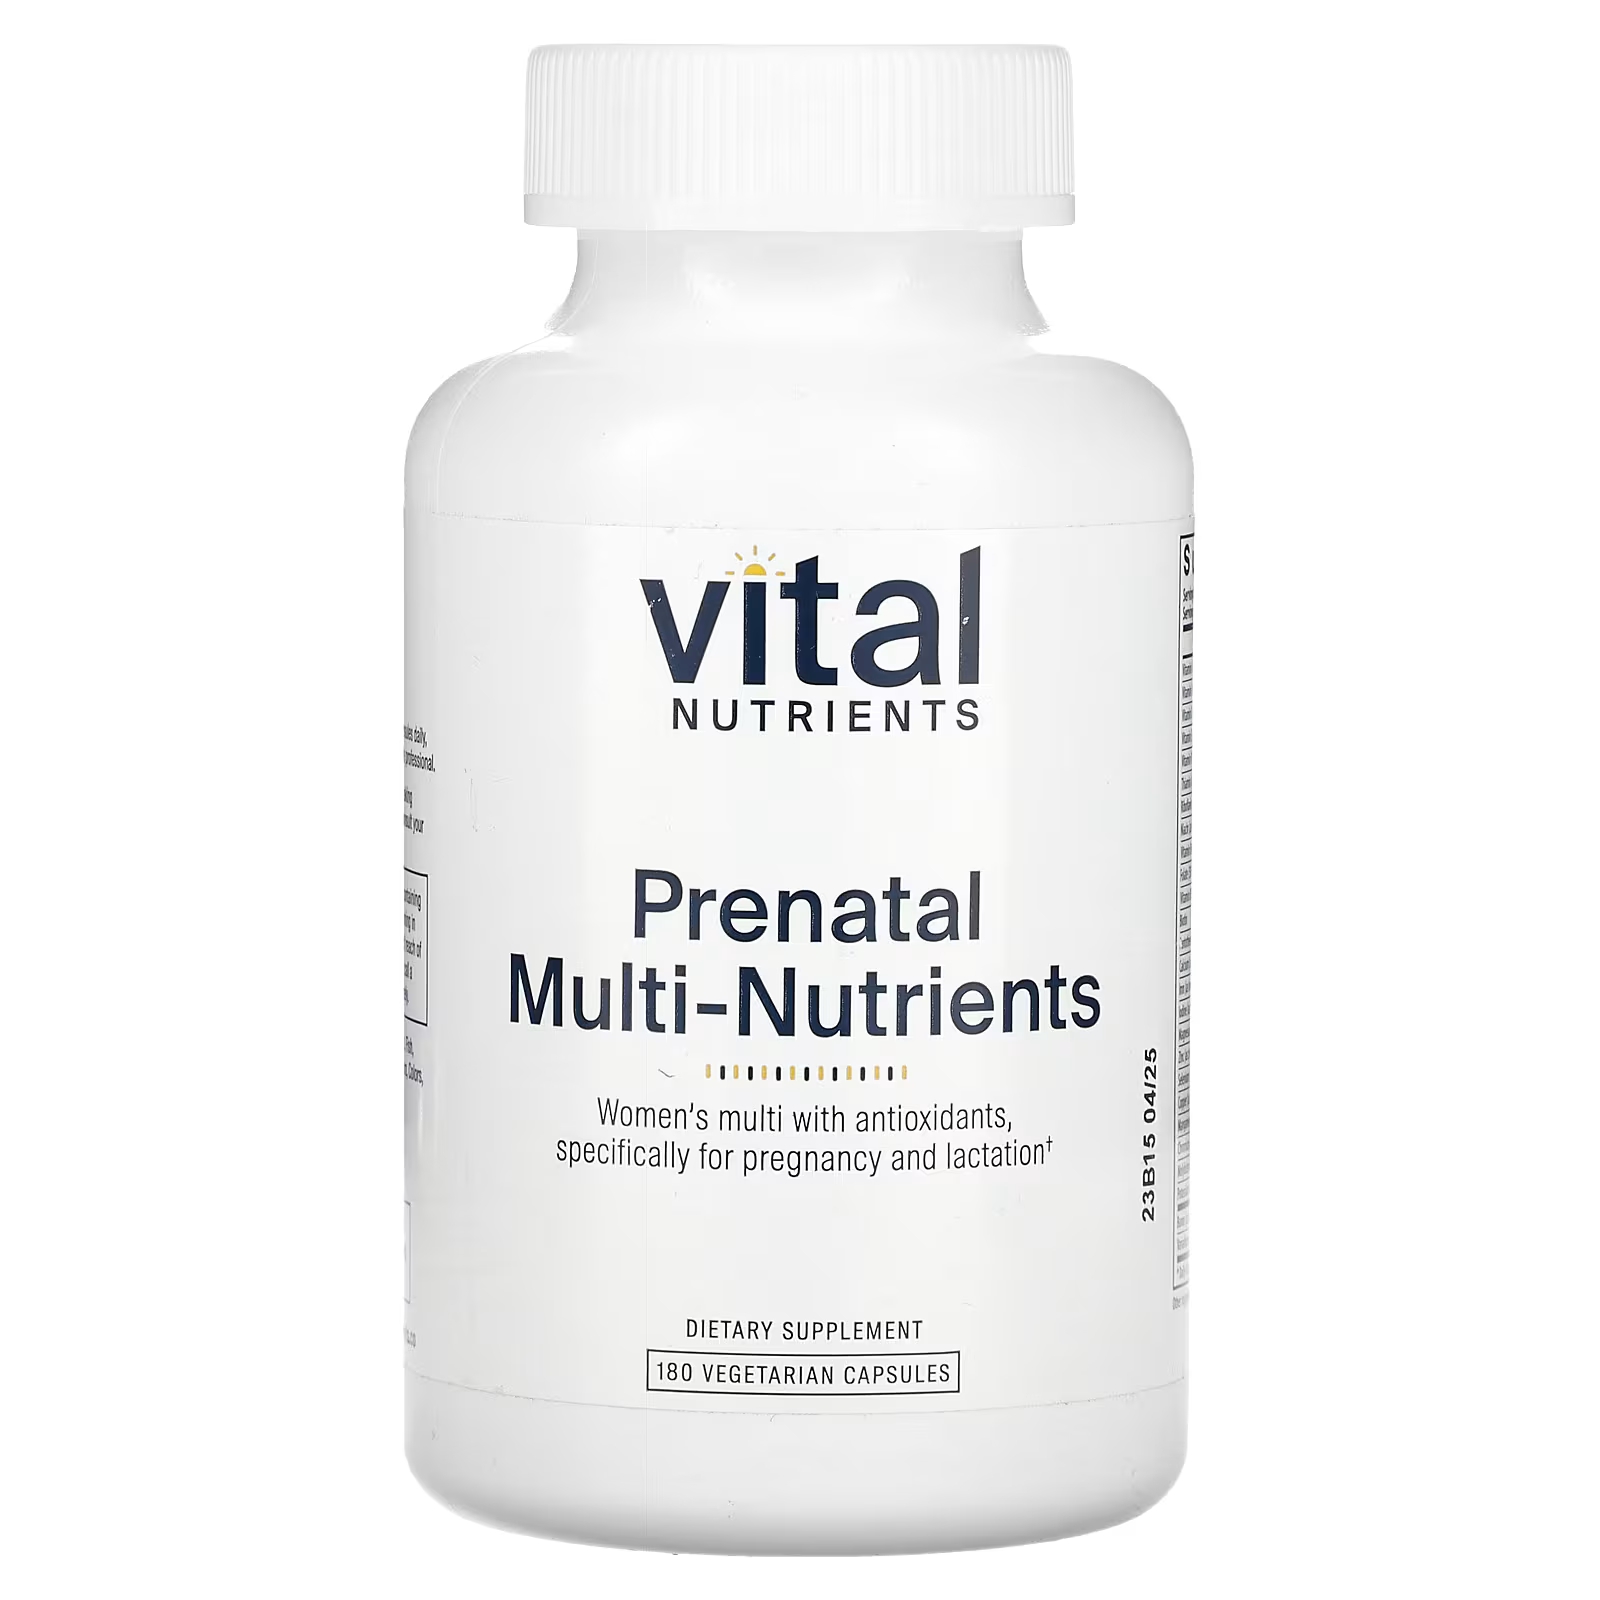 Пищевая добавка Vital Nutrients Prenatal Multi-Nutrients, 180 капсул витамины антиоксиданты минералы nutraway магний б6